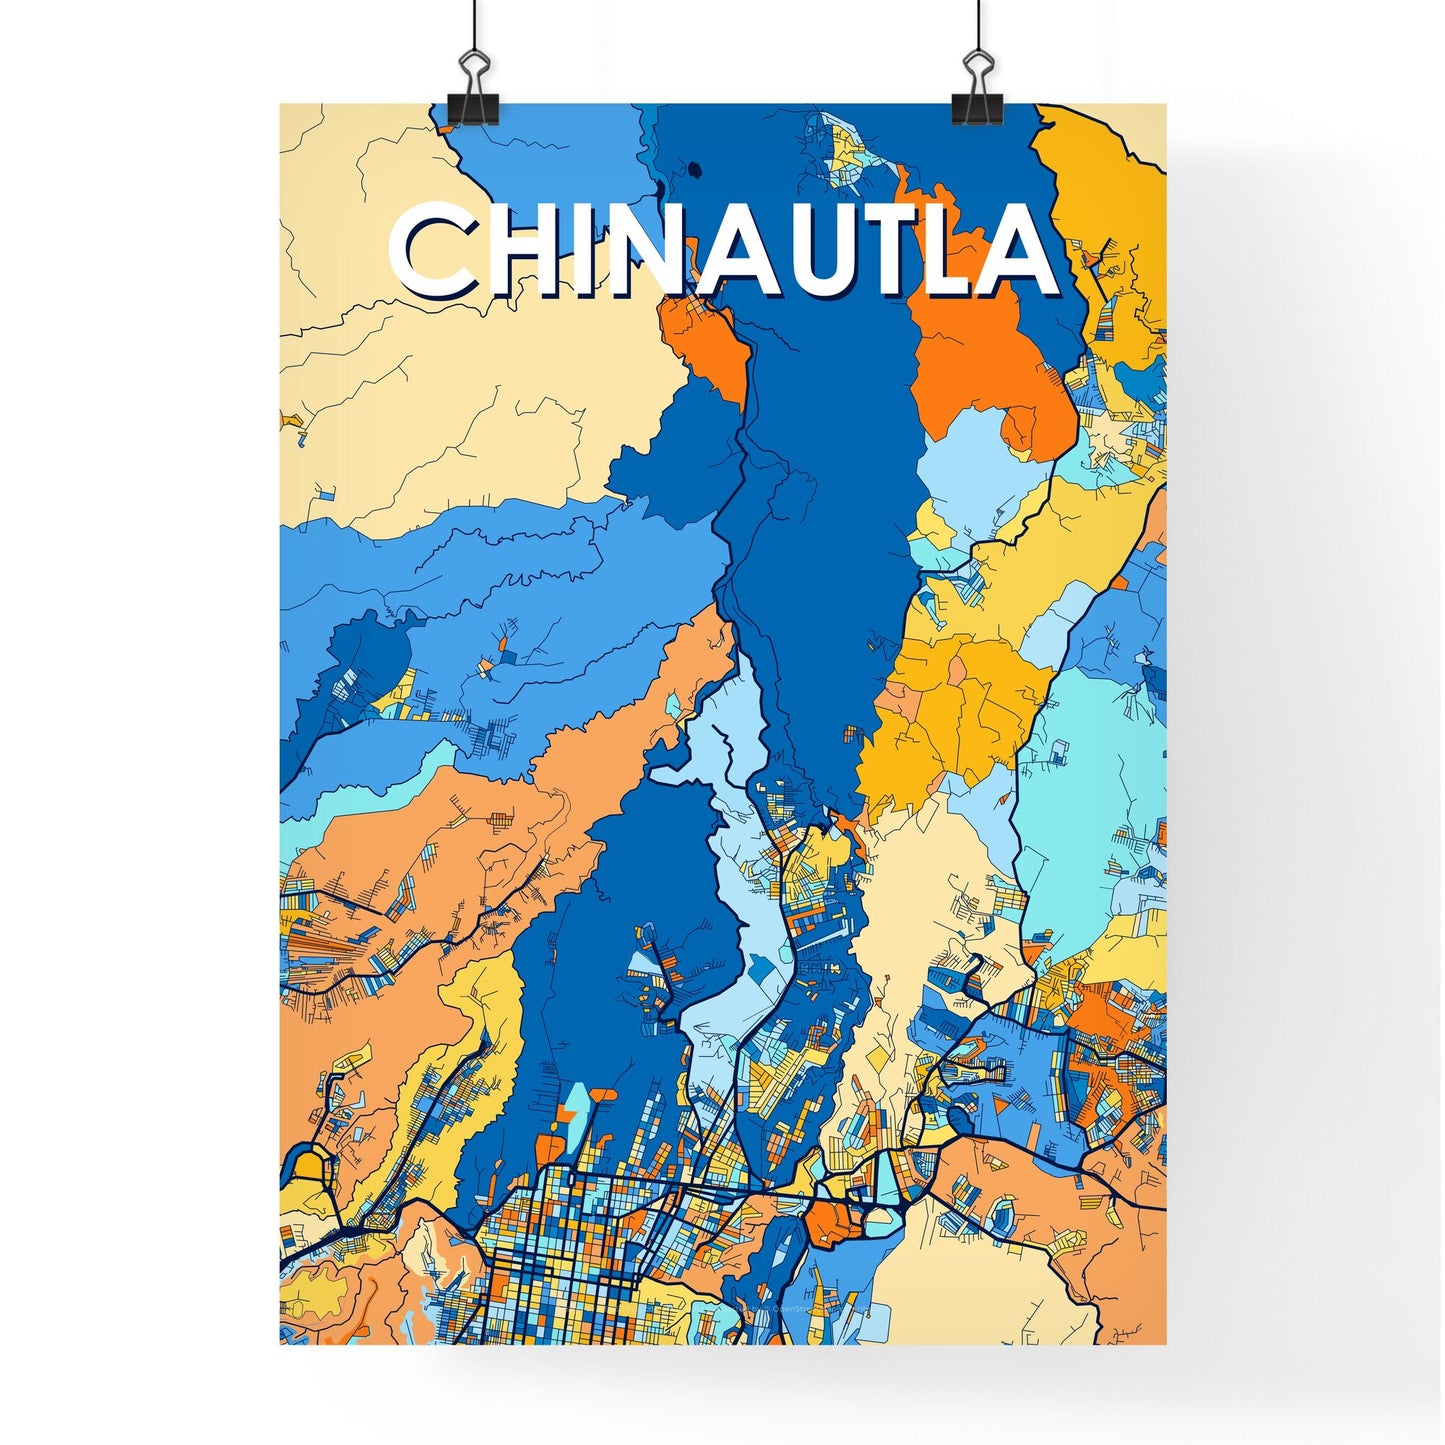 CHINAUTLA GUATEMALA Vibrant Colorful Art Map Poster Blue Orange